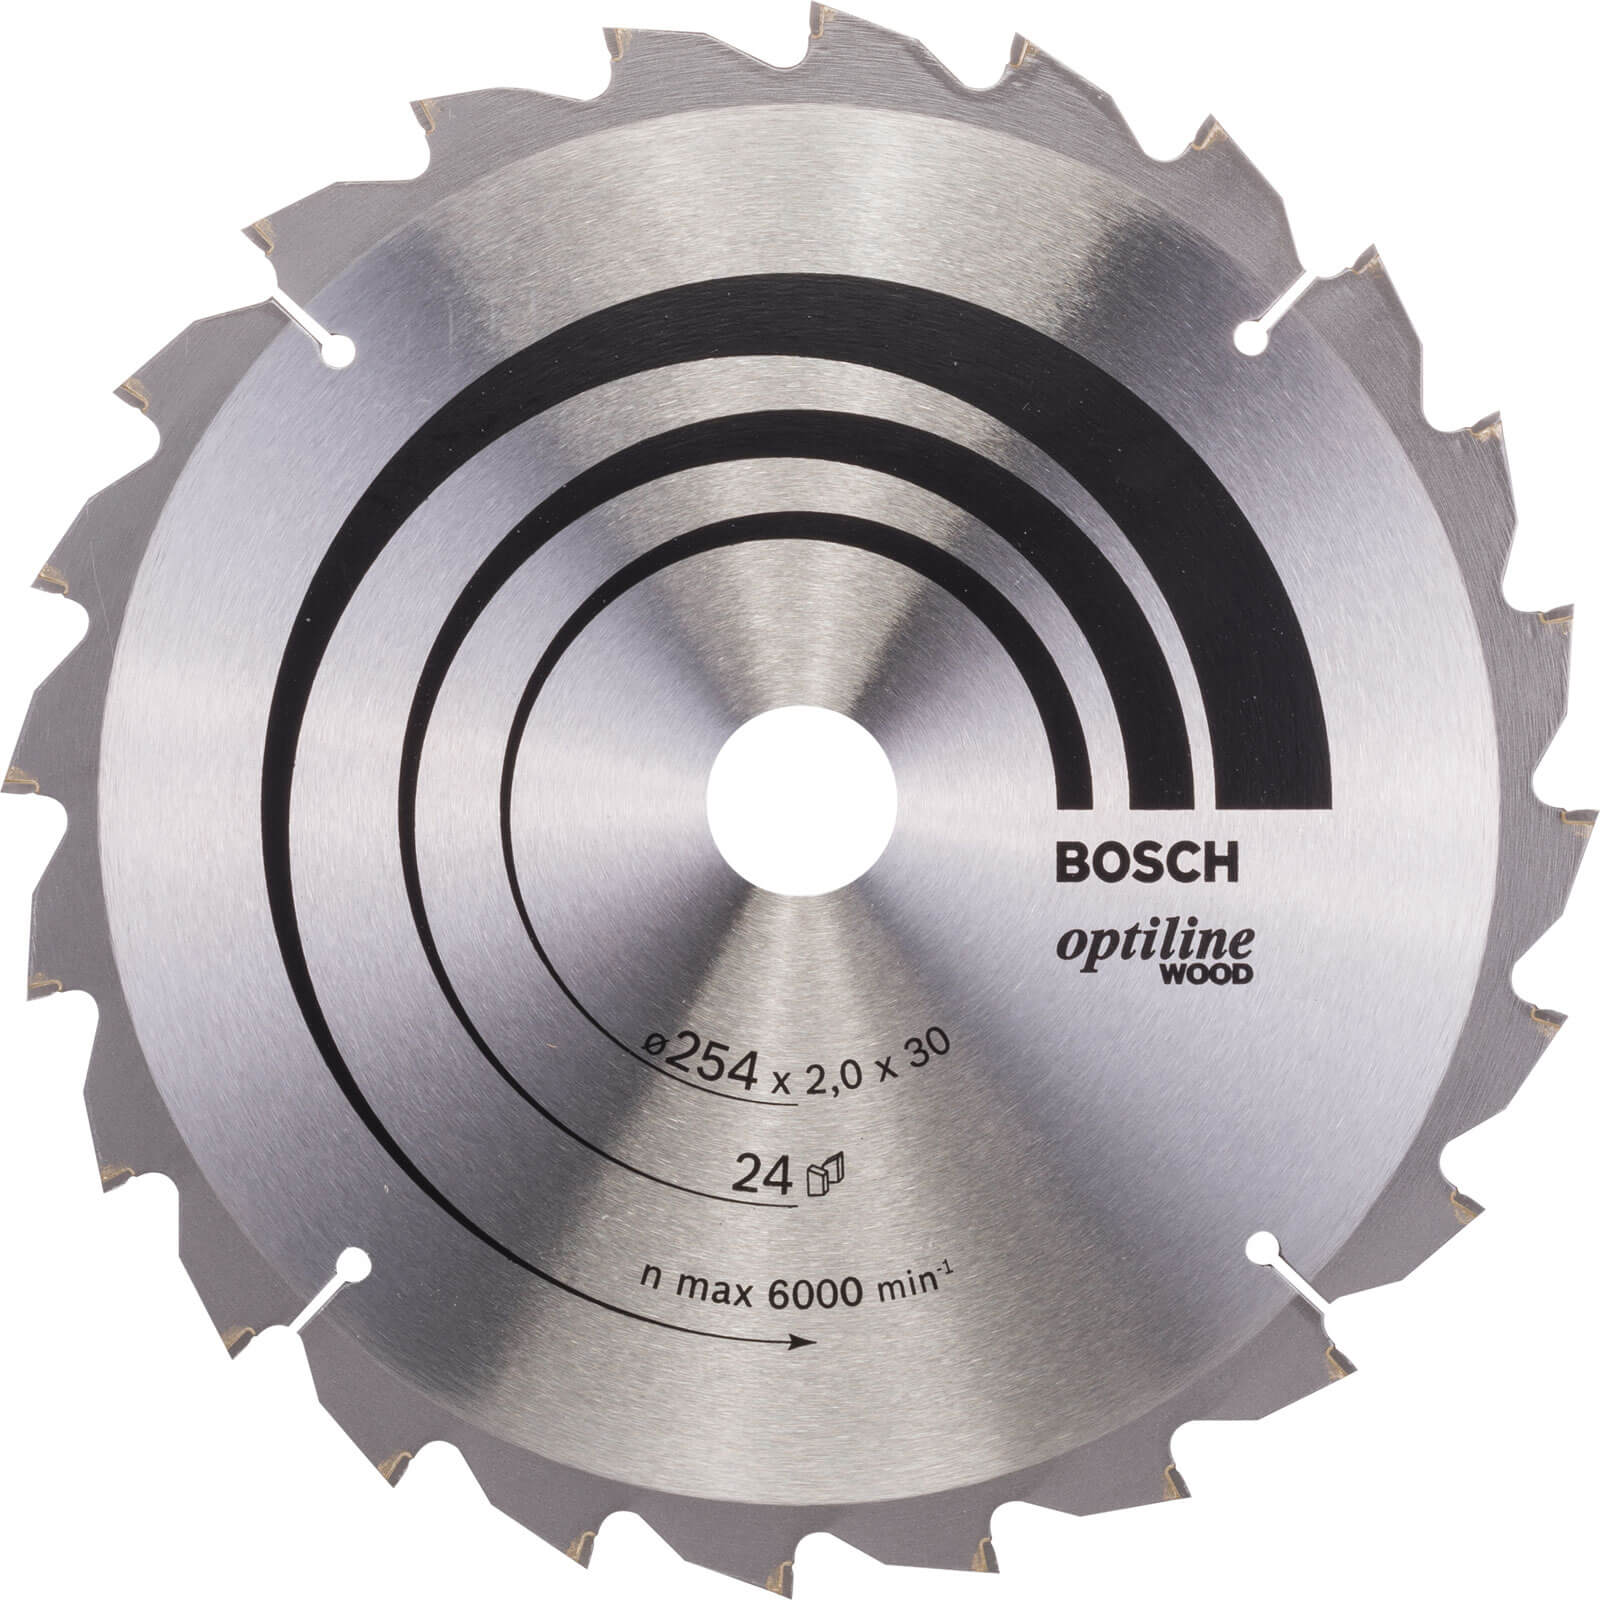 Photo of Bosch Optiline Wood Cutting Mitre Saw Blade 254mm 24t 30mm